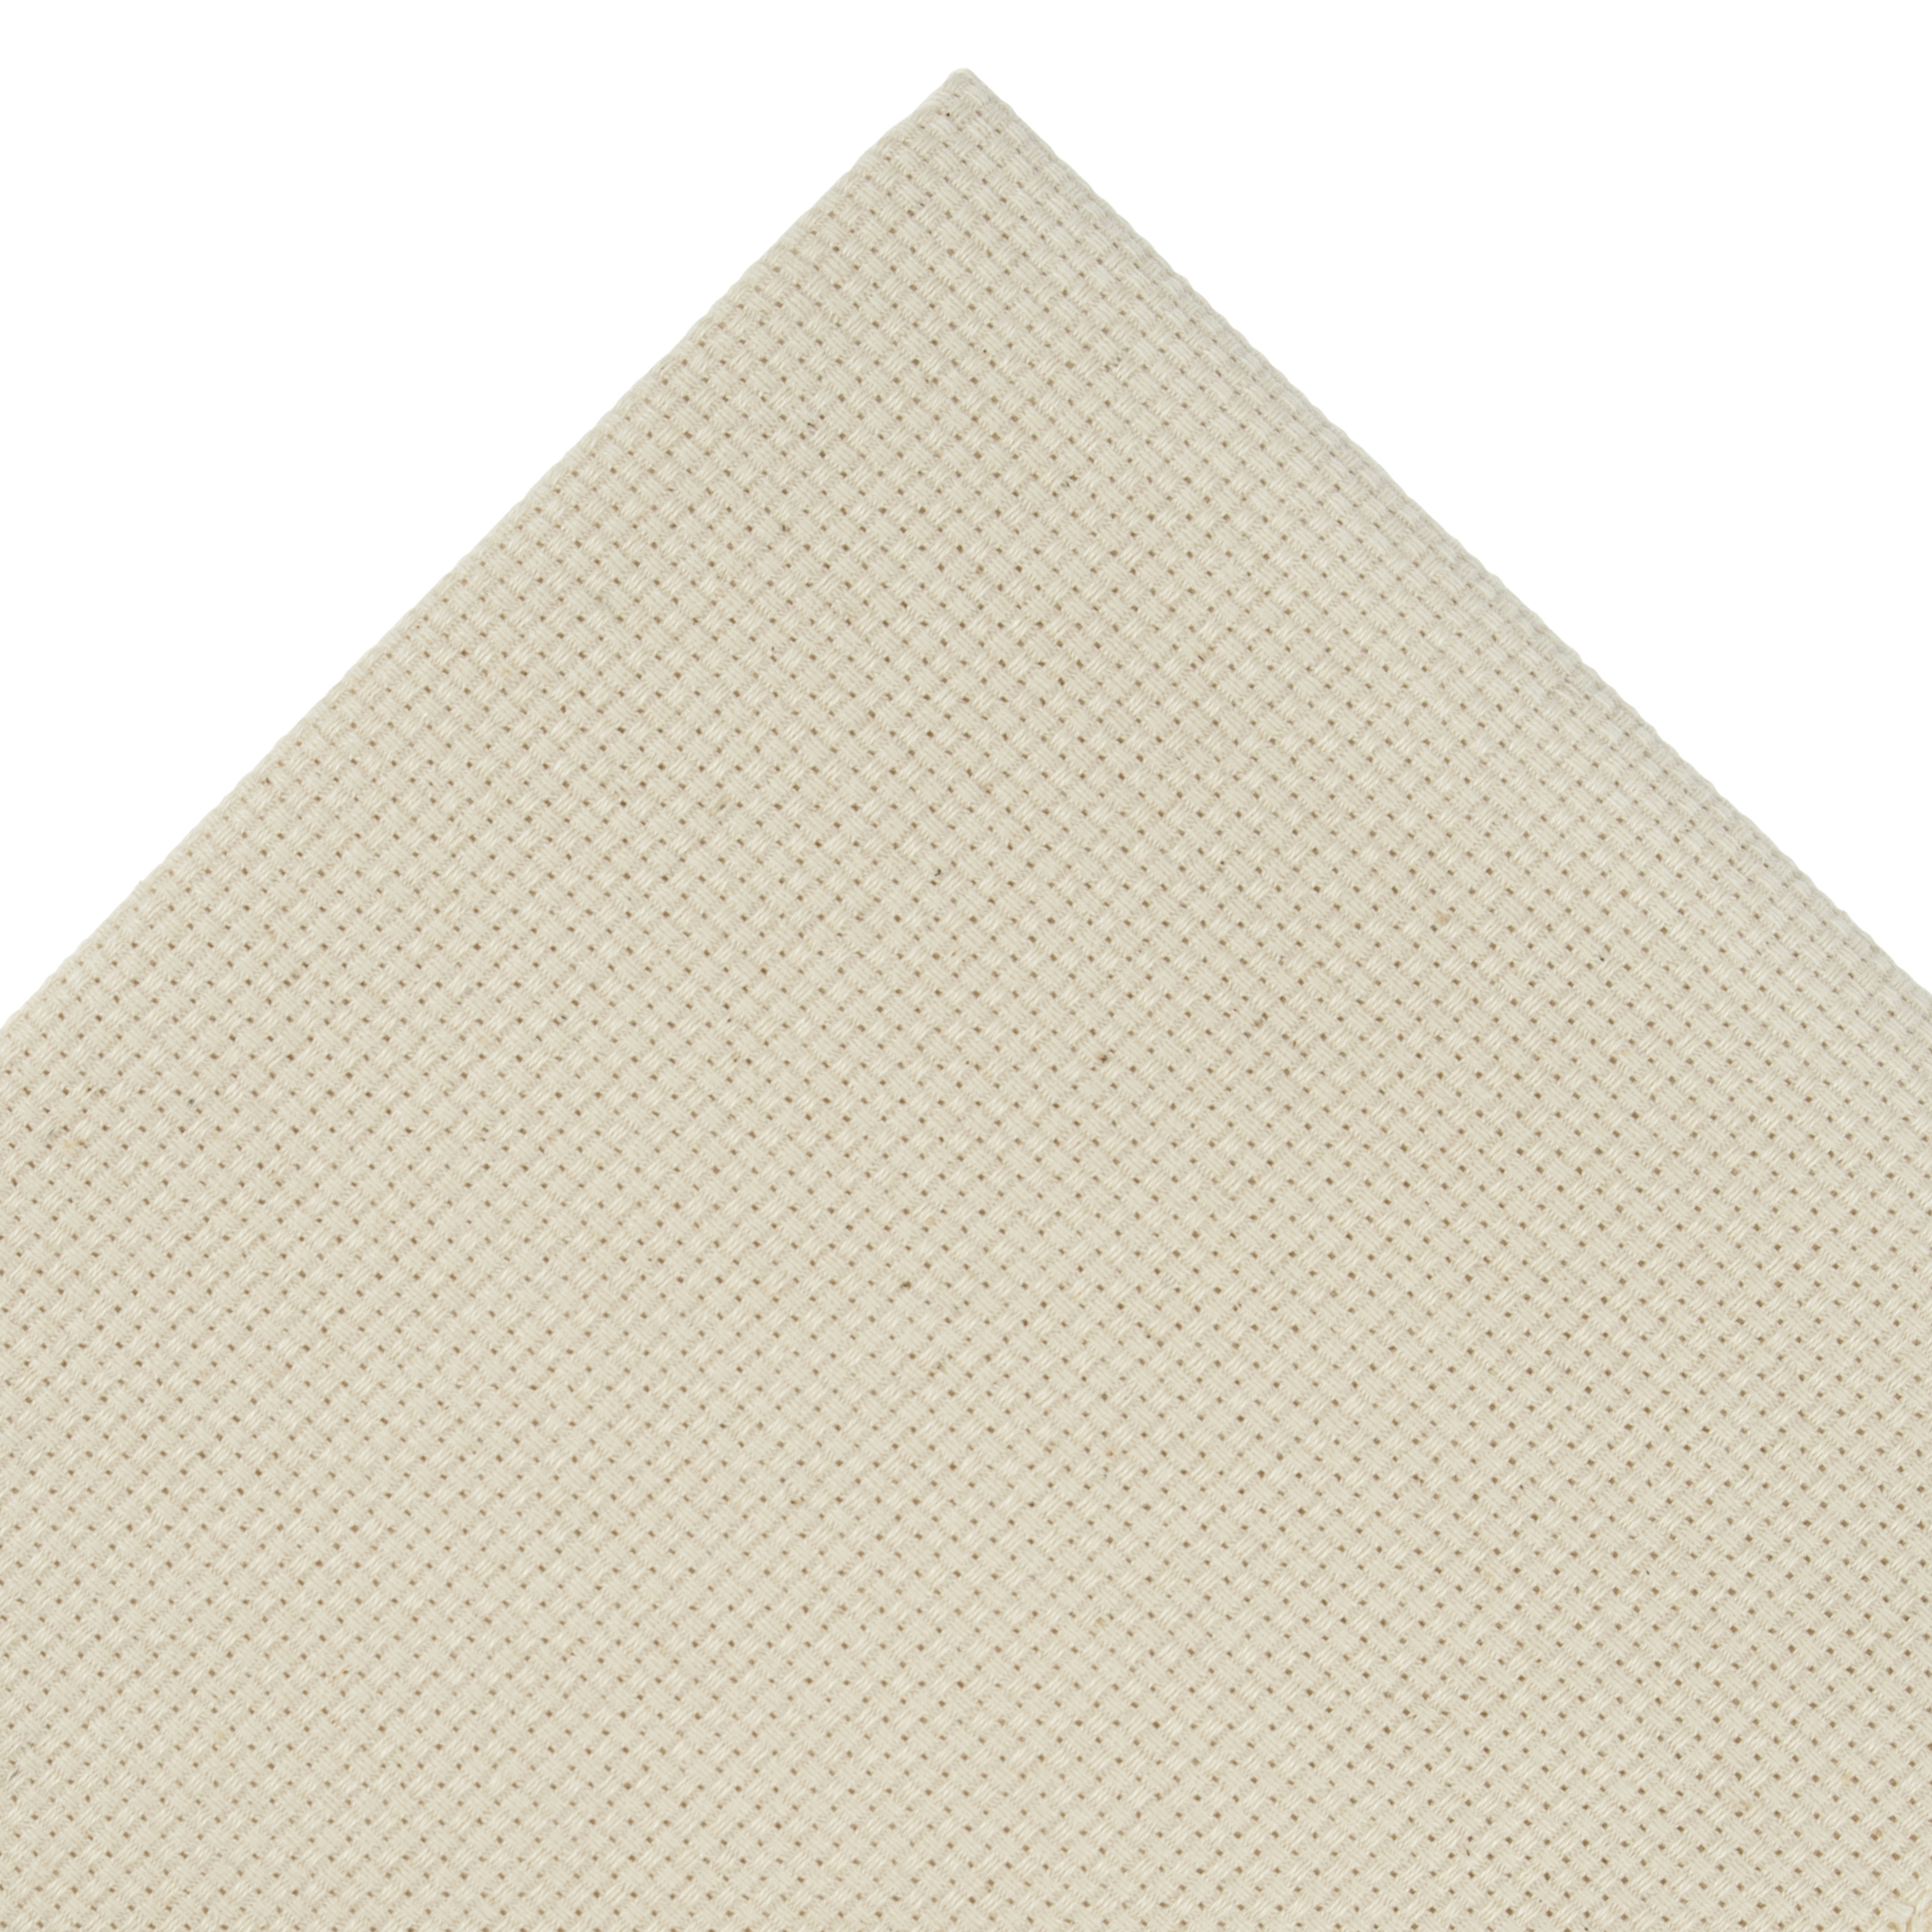 Punch Needle Fabric: 11 Count: 70 x 80cm: Cream: 1 Piece - Trimits